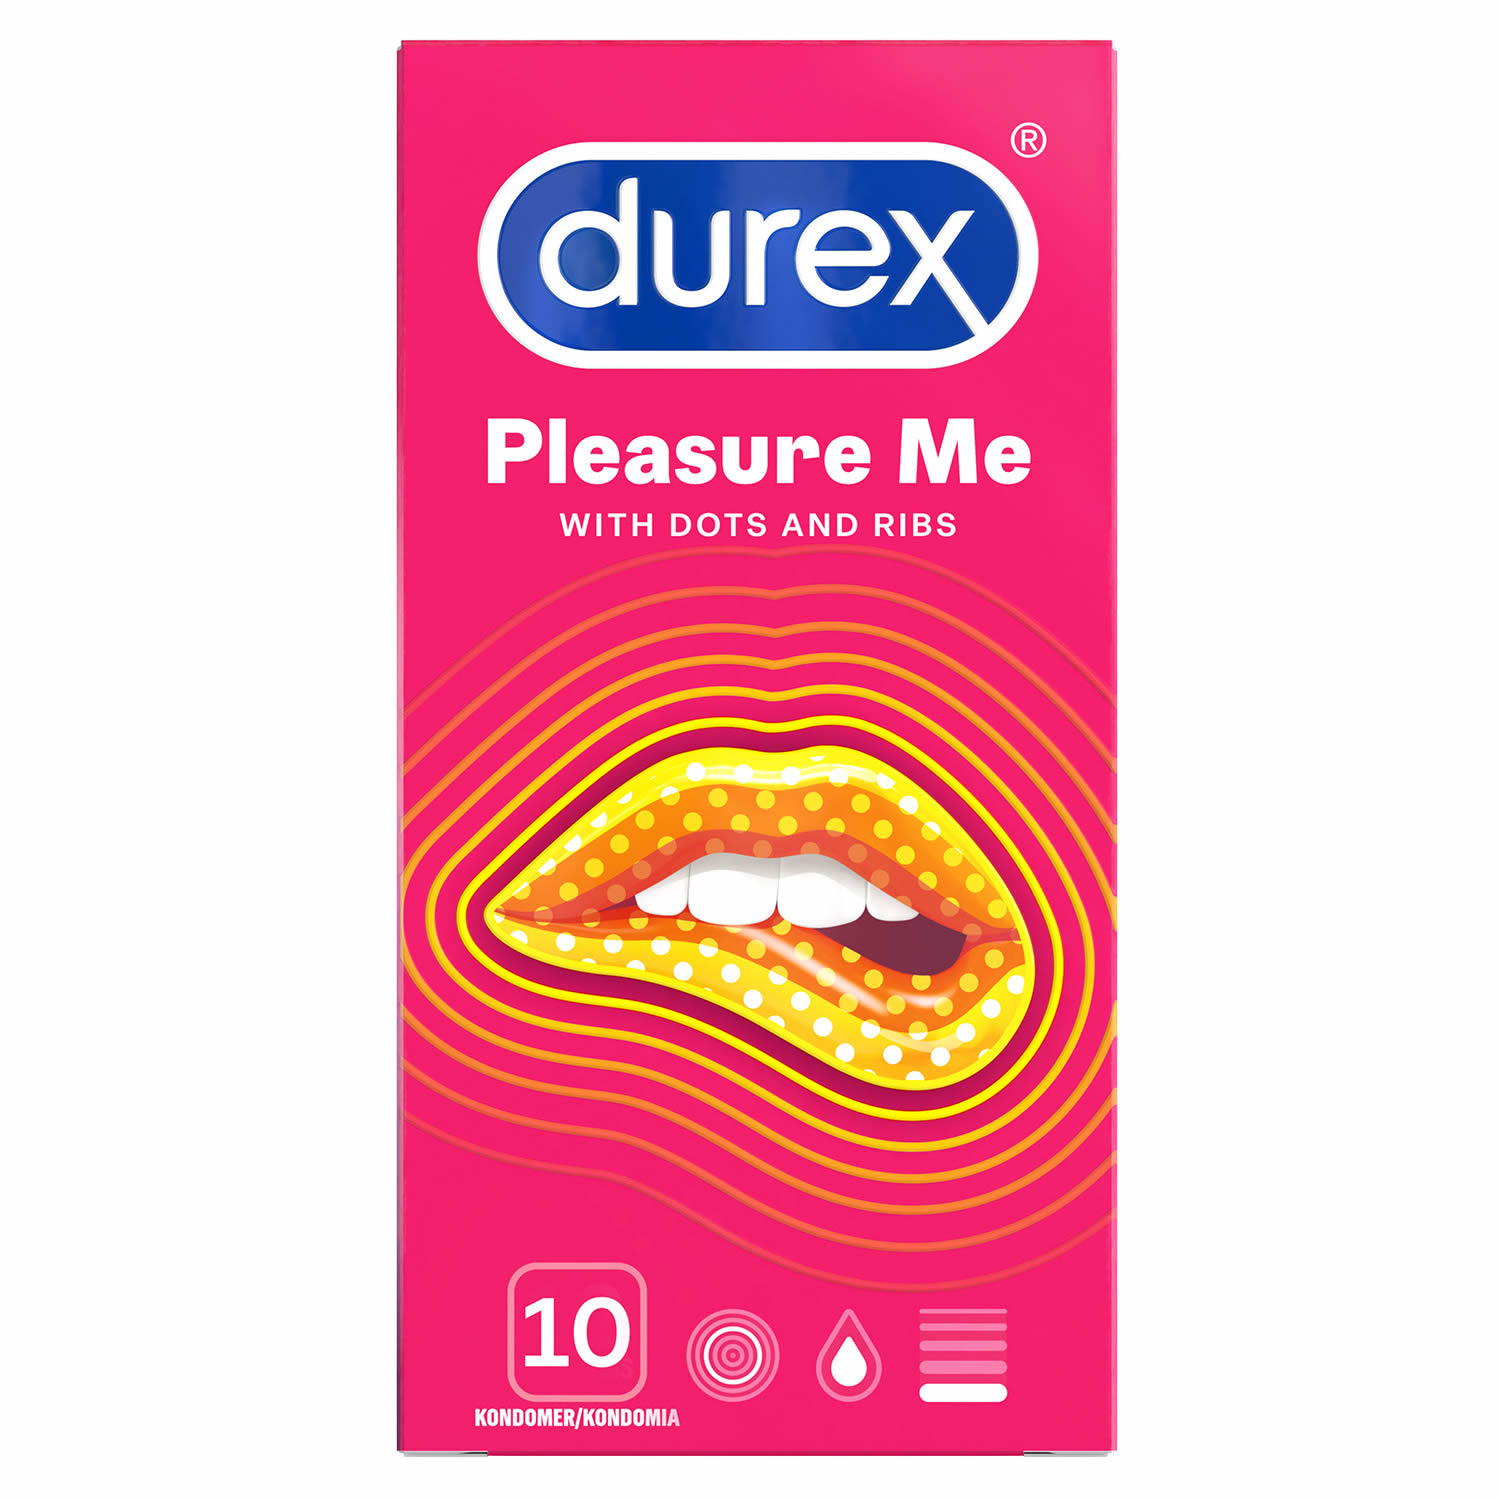 Durex Pleasure Me Kondom med riller og knopper